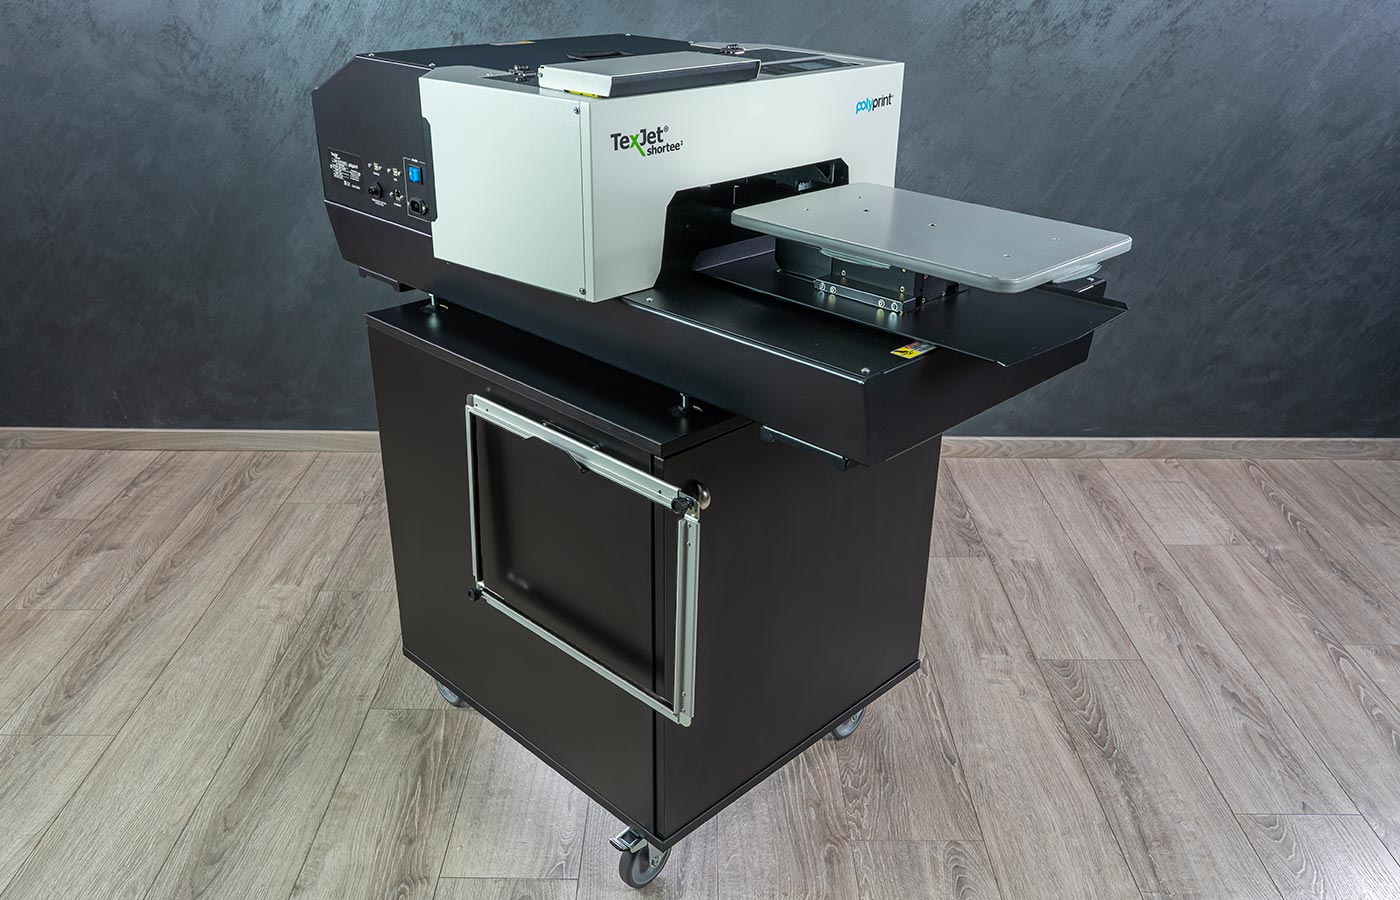 Printer Stand - Relocate your printer